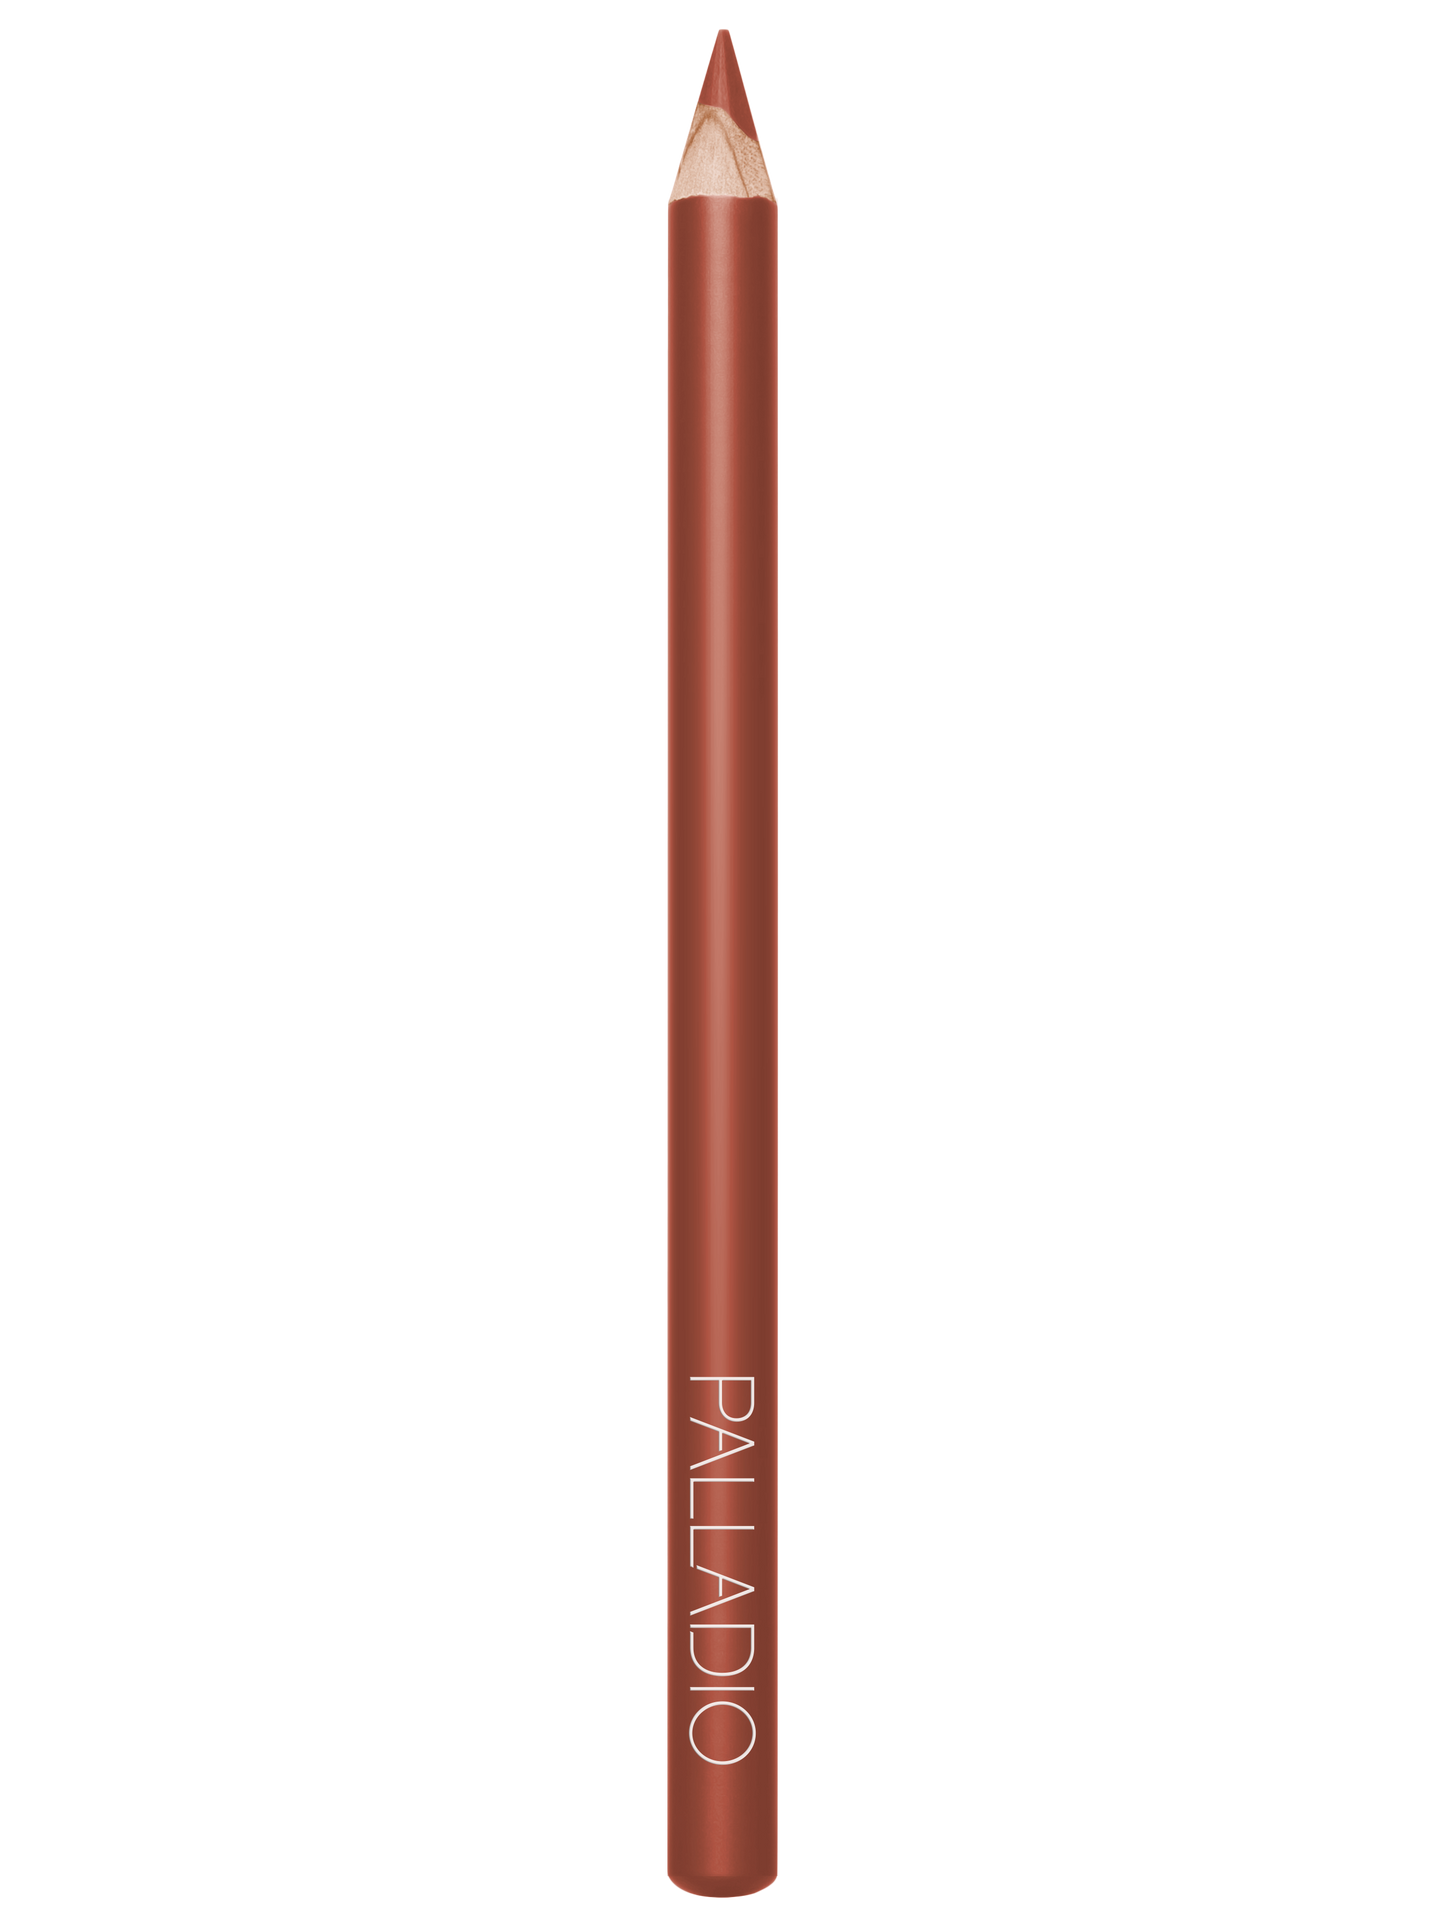 Palladio Lipstick Liner PencilLip LinerPALLADIOColor: Nutmeg Ll278